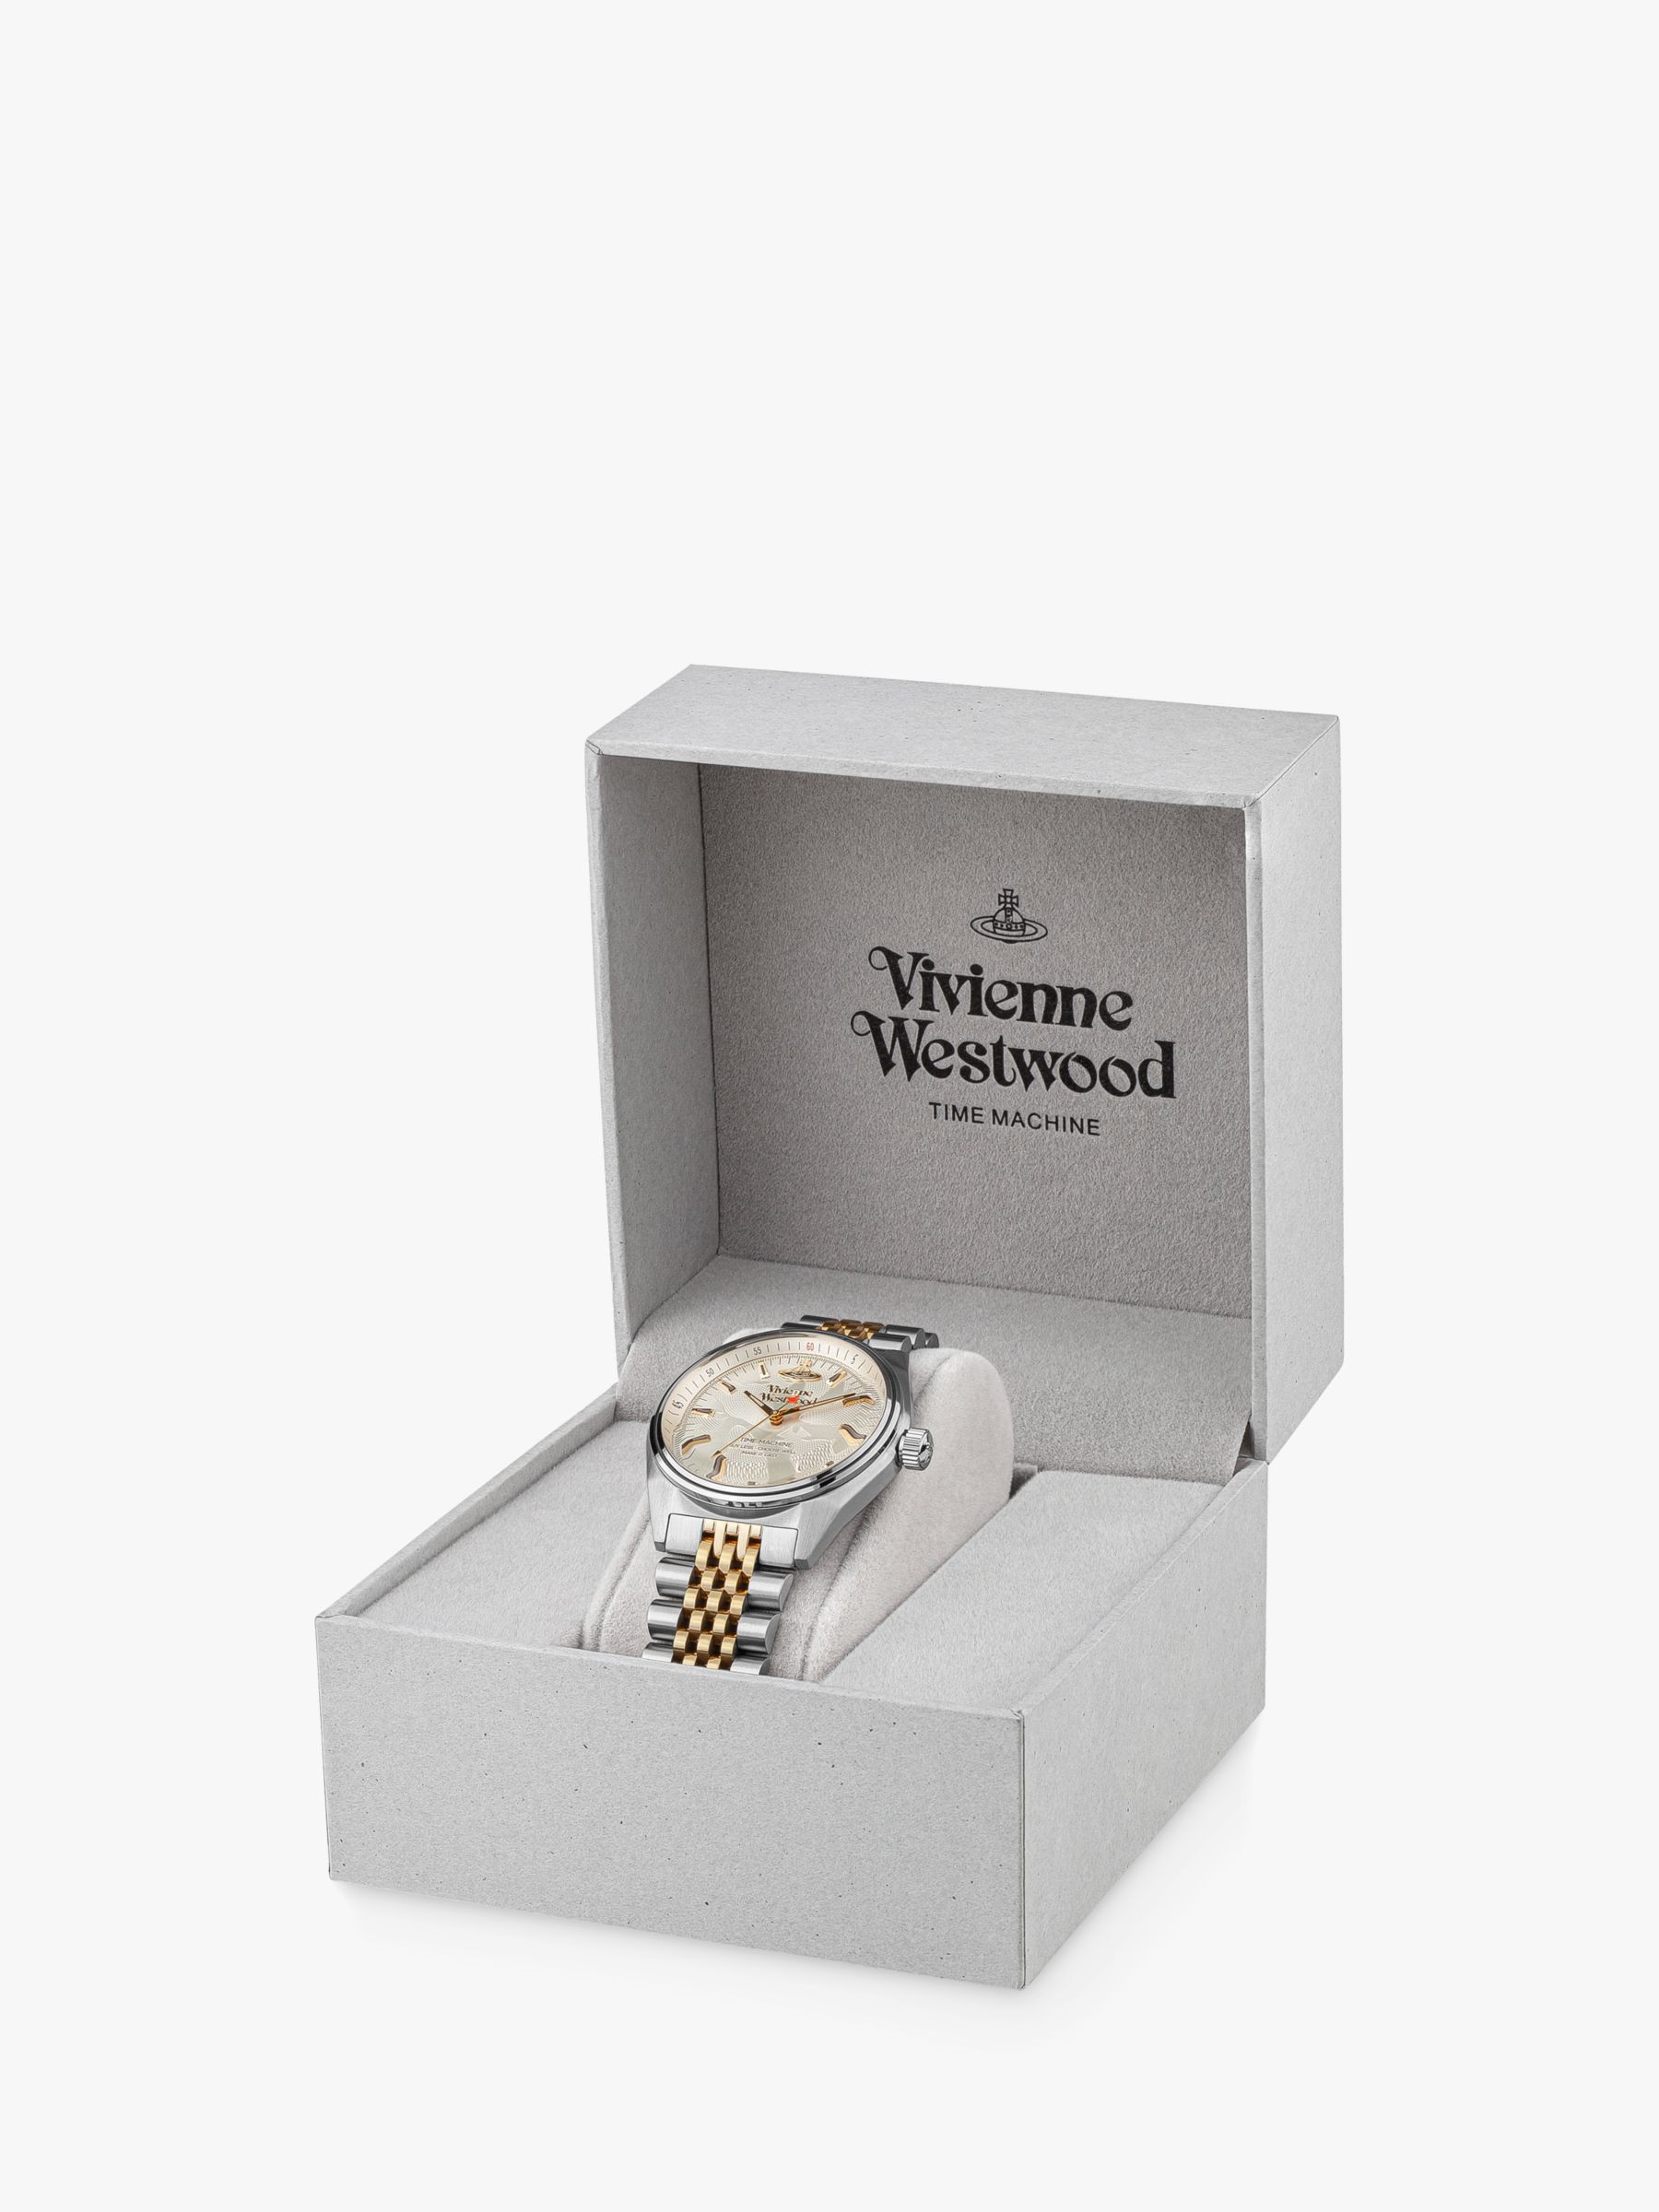 Vivienne Westwood (TIME MACHINE) 日本初の - 時計